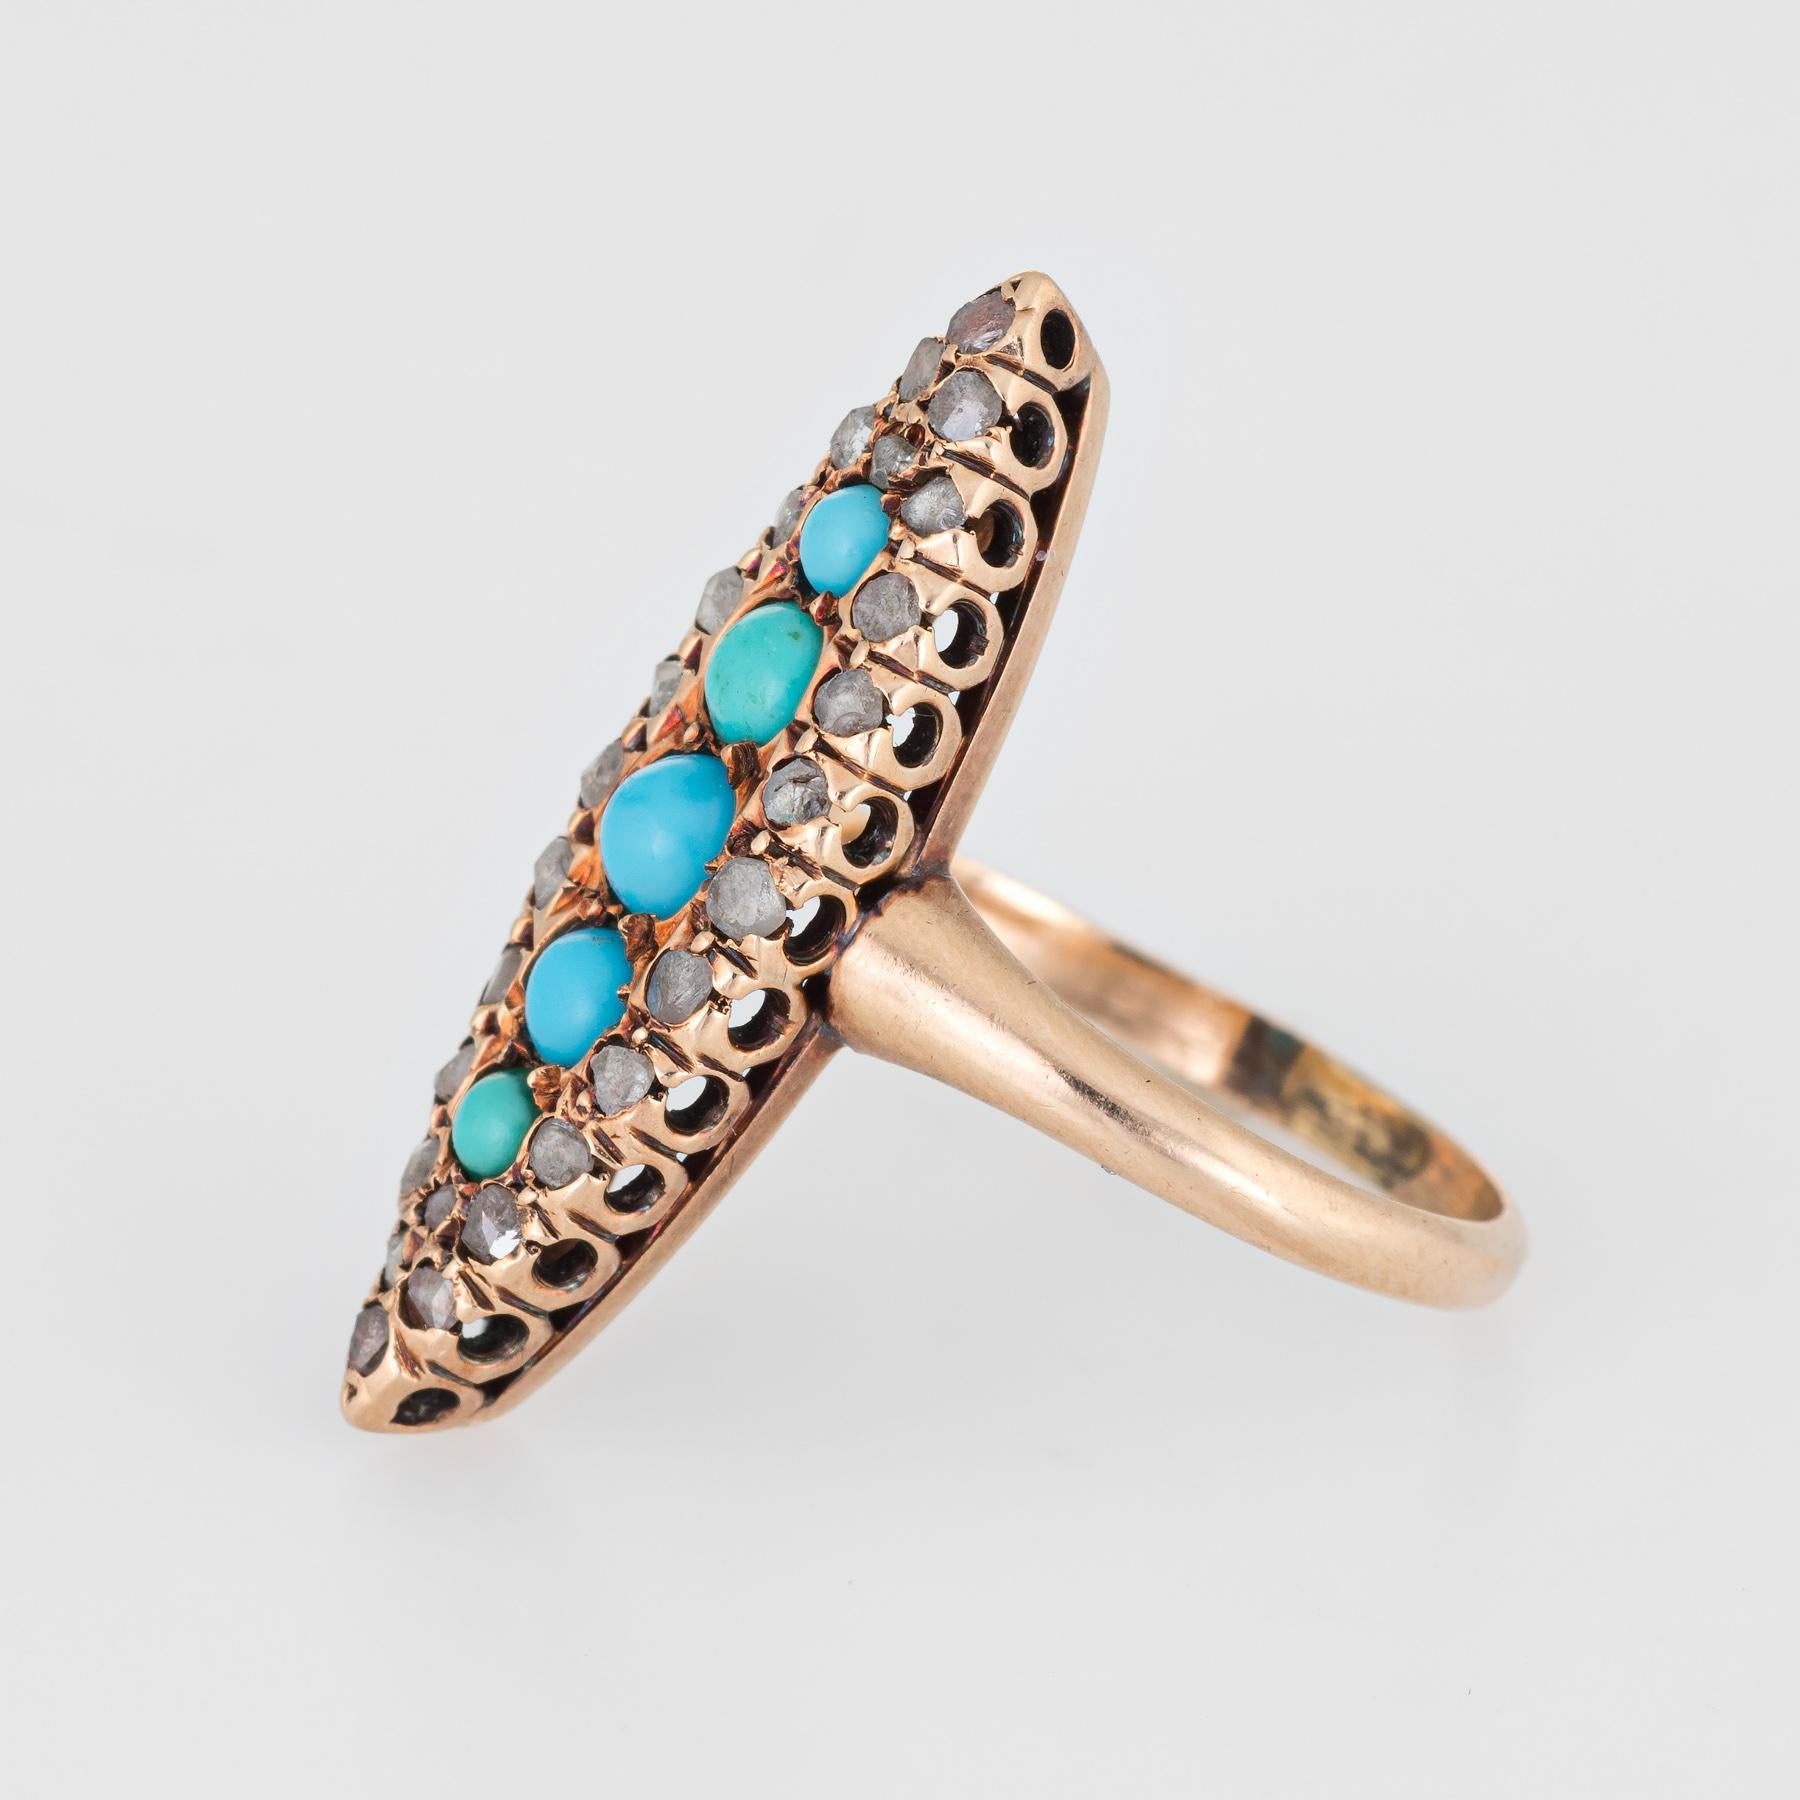 Women's Antique Victorian Navette Ring Persian Turquoise Rose Cut Diamond 10k Gold 5.25